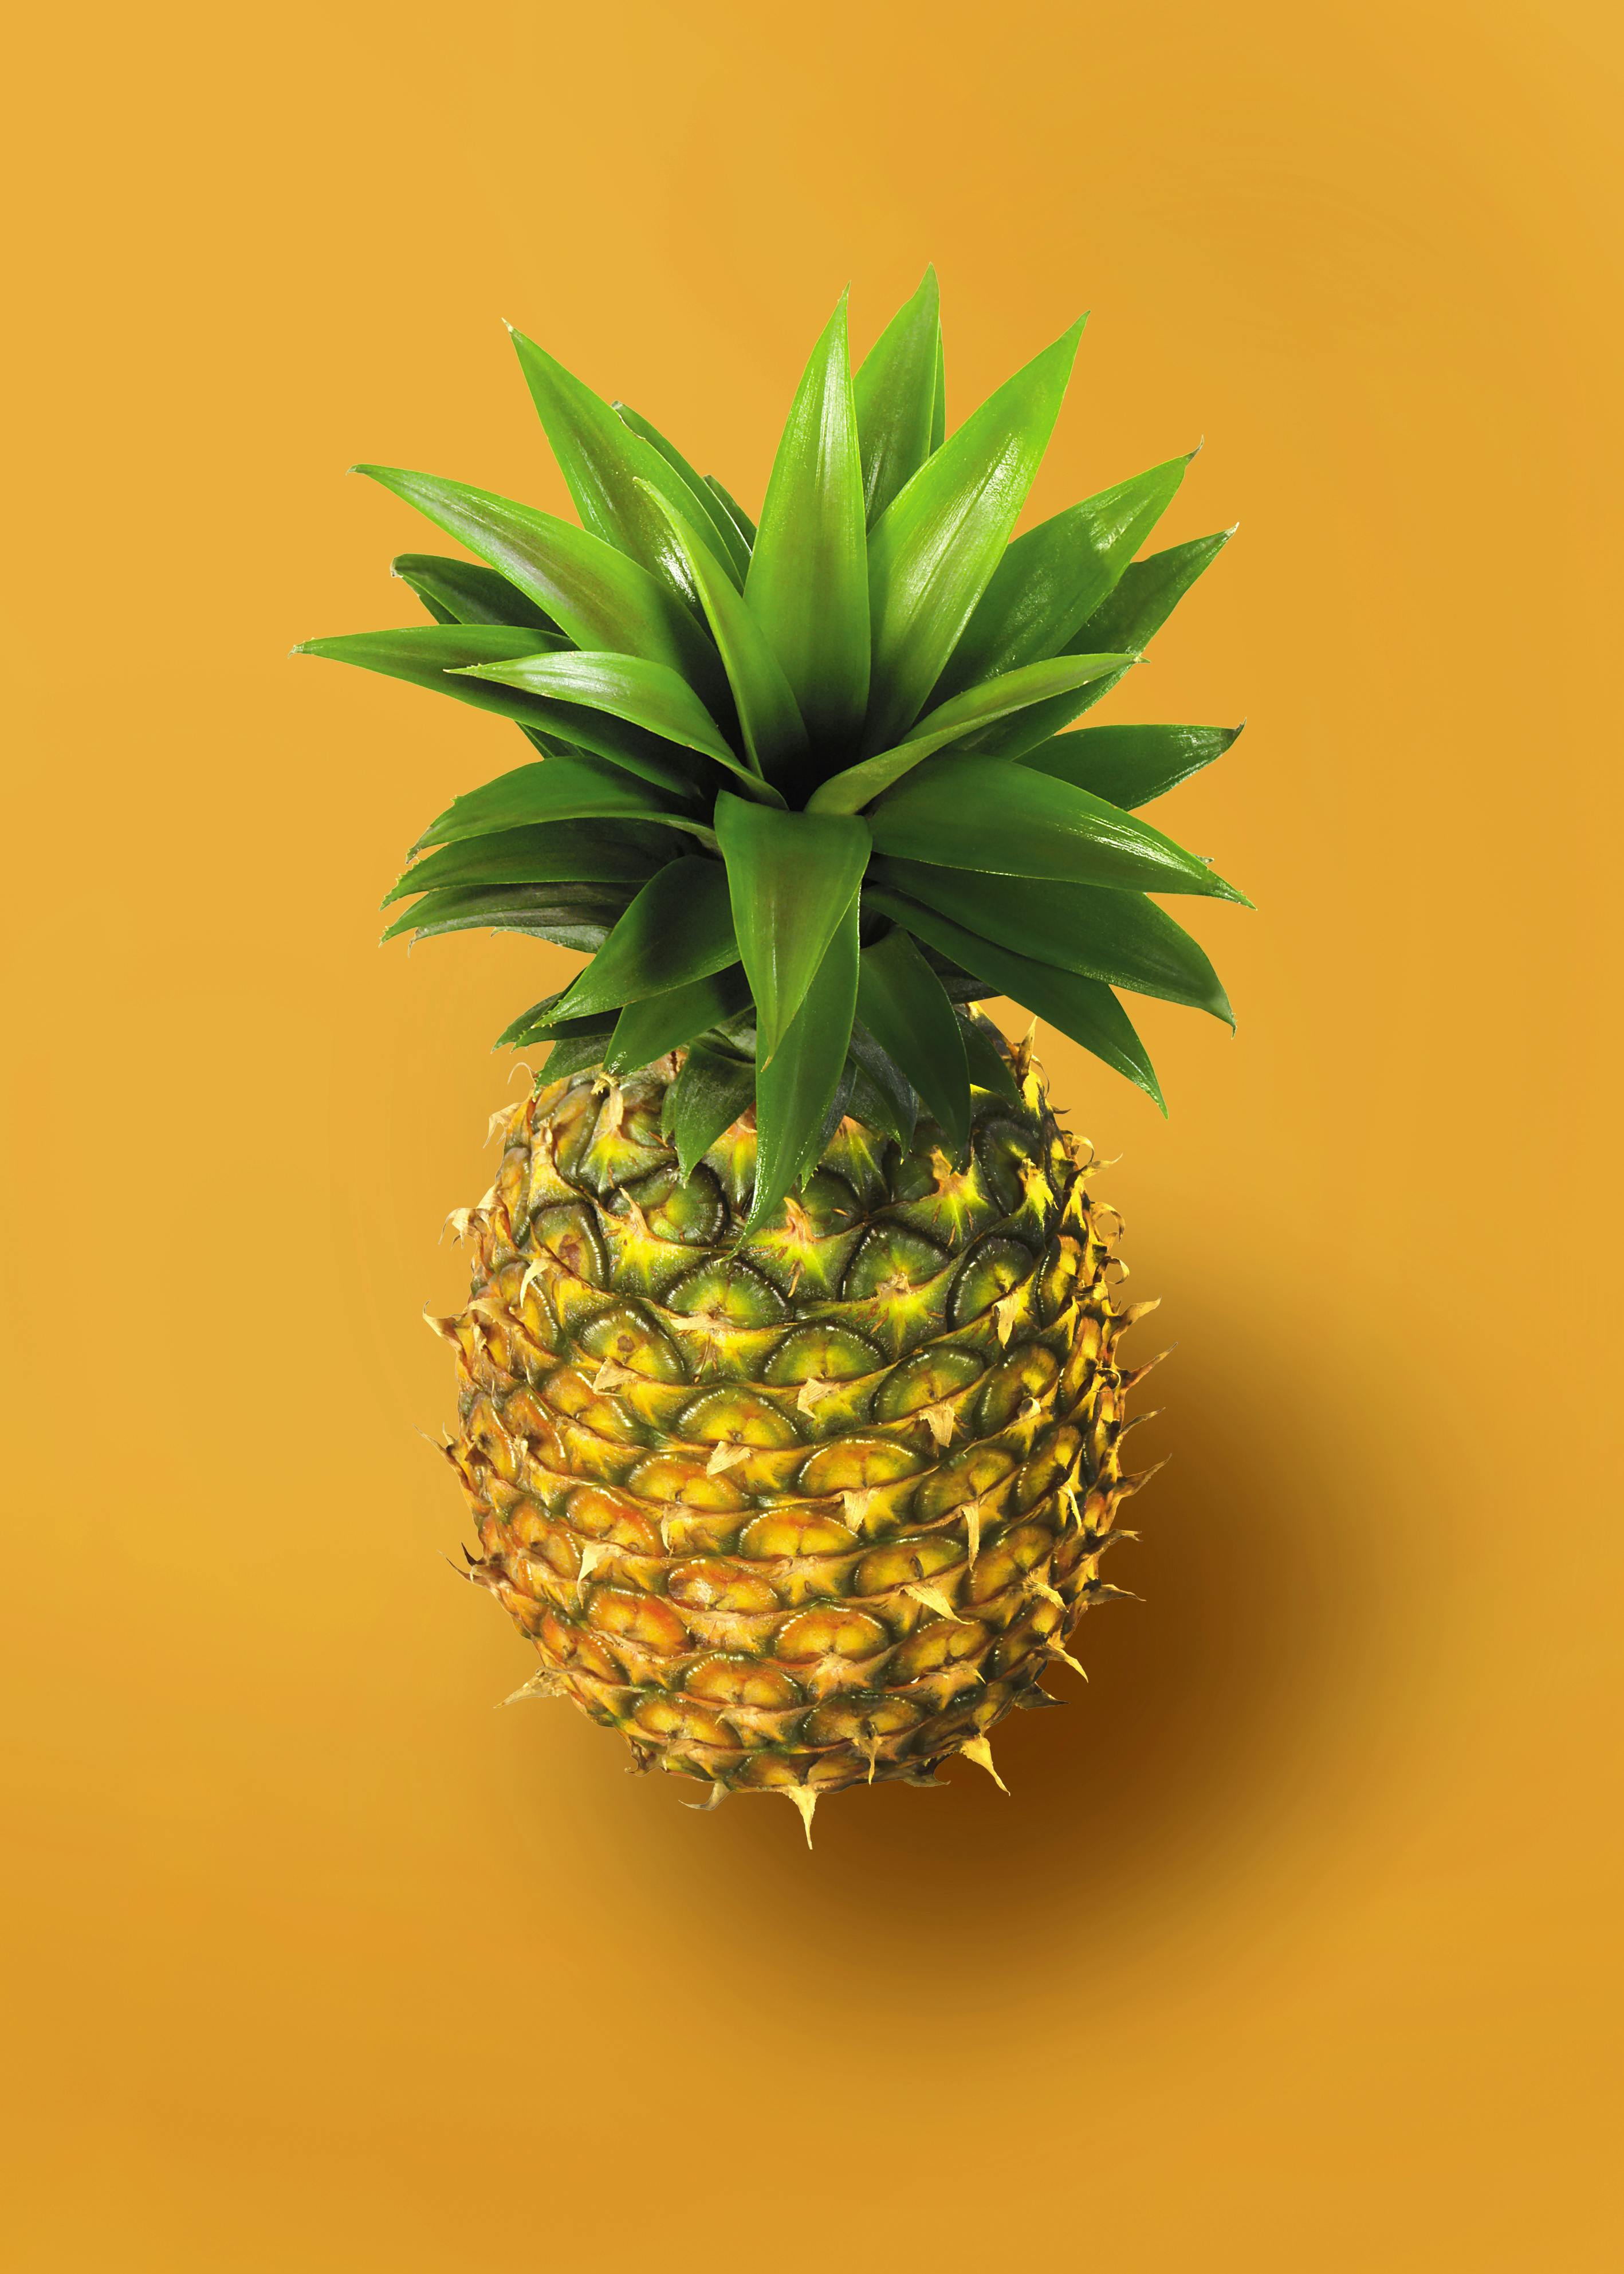 Pineapple on Yellow Background · Free Stock Photo